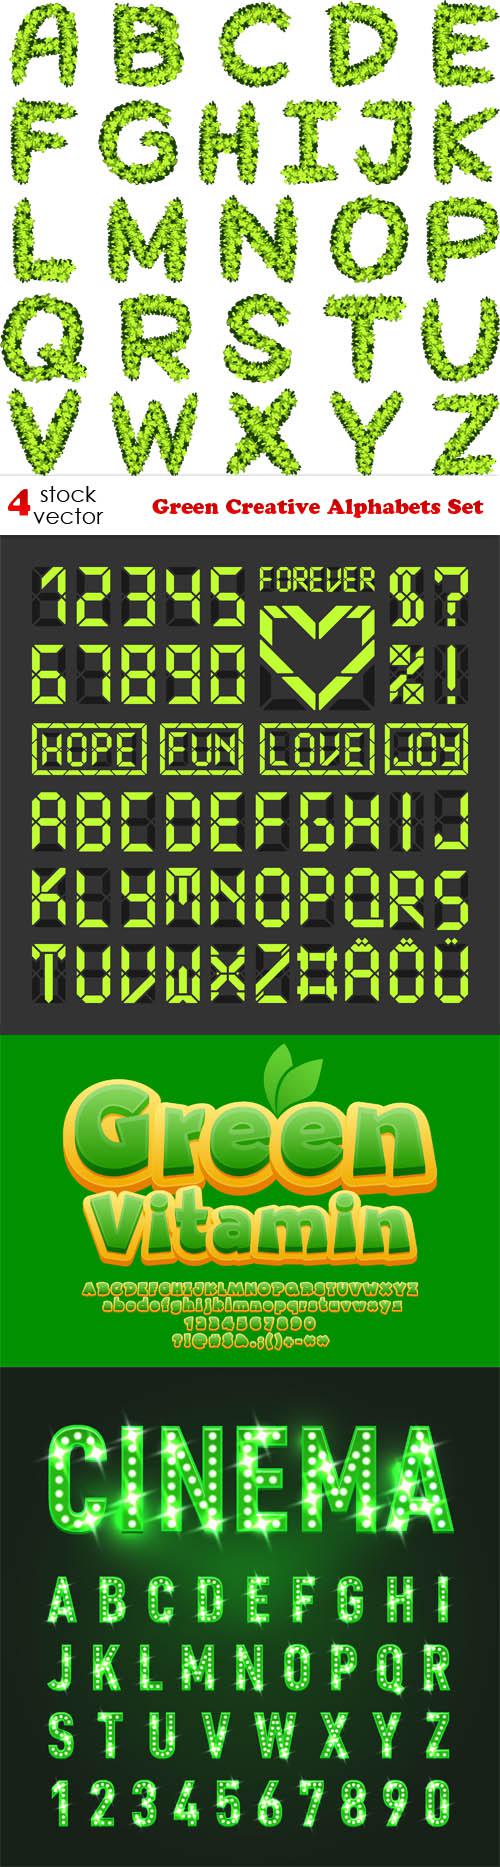 Green Creative Alphabets Set